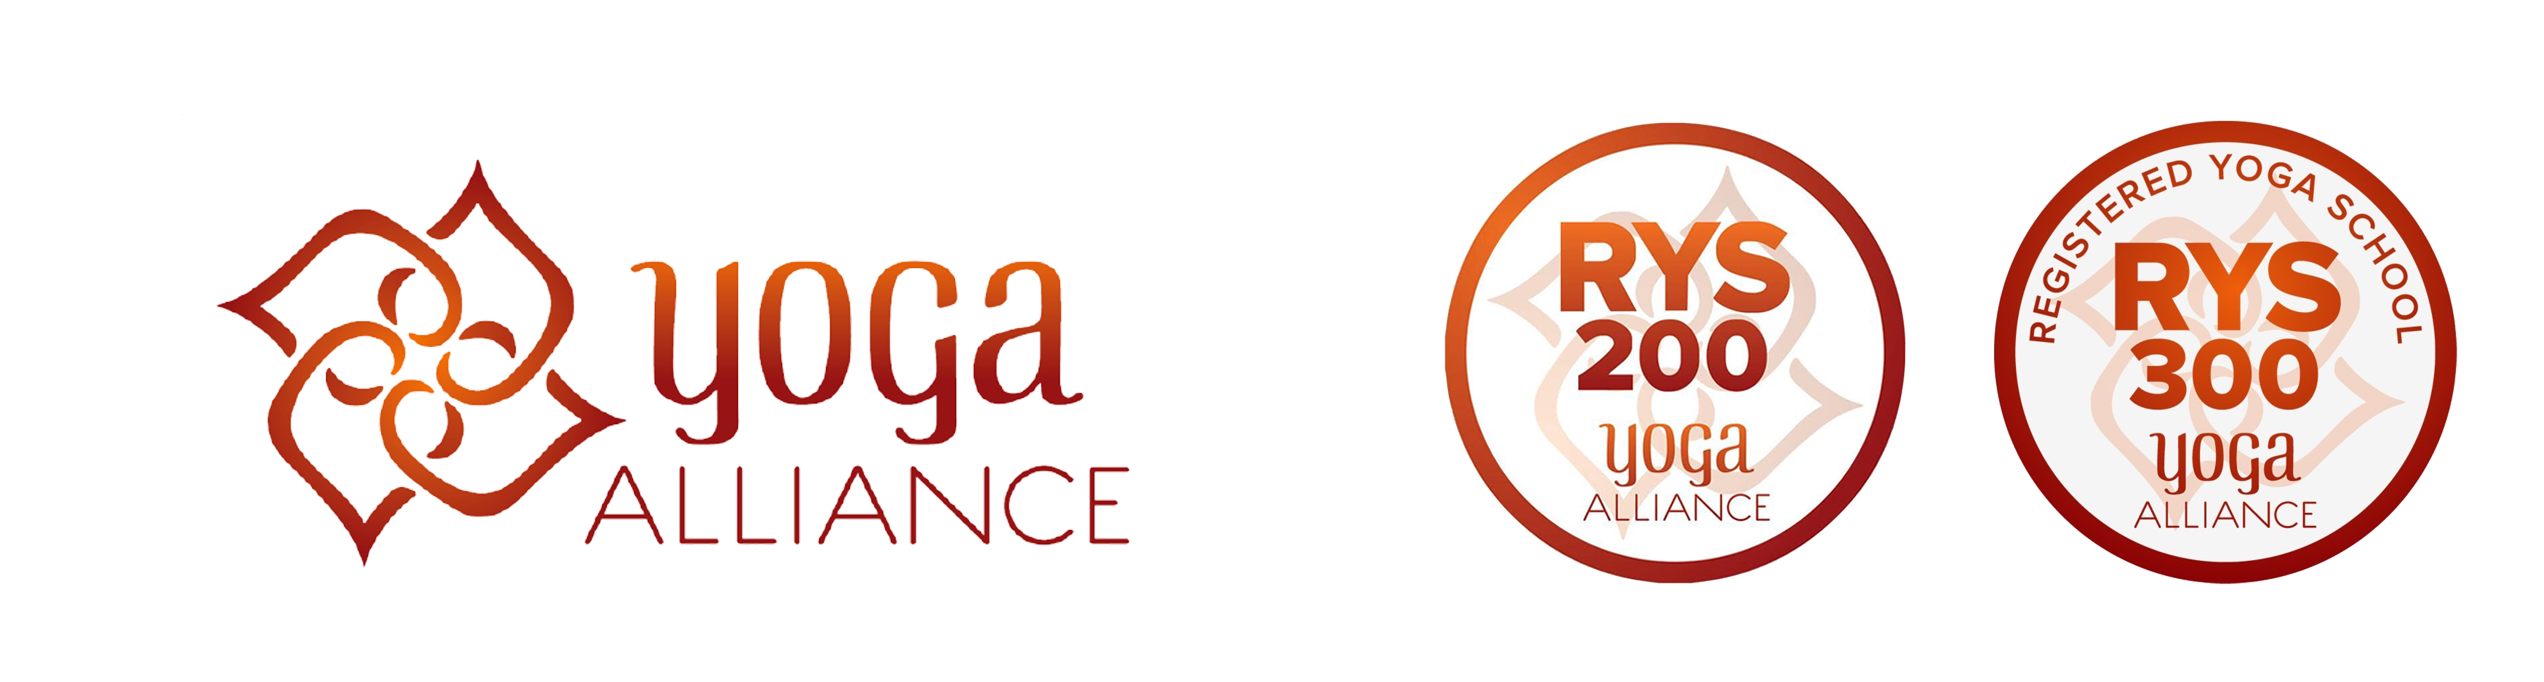 US Yoga Alliance - Nepal Yoga Academy and Retreat Center